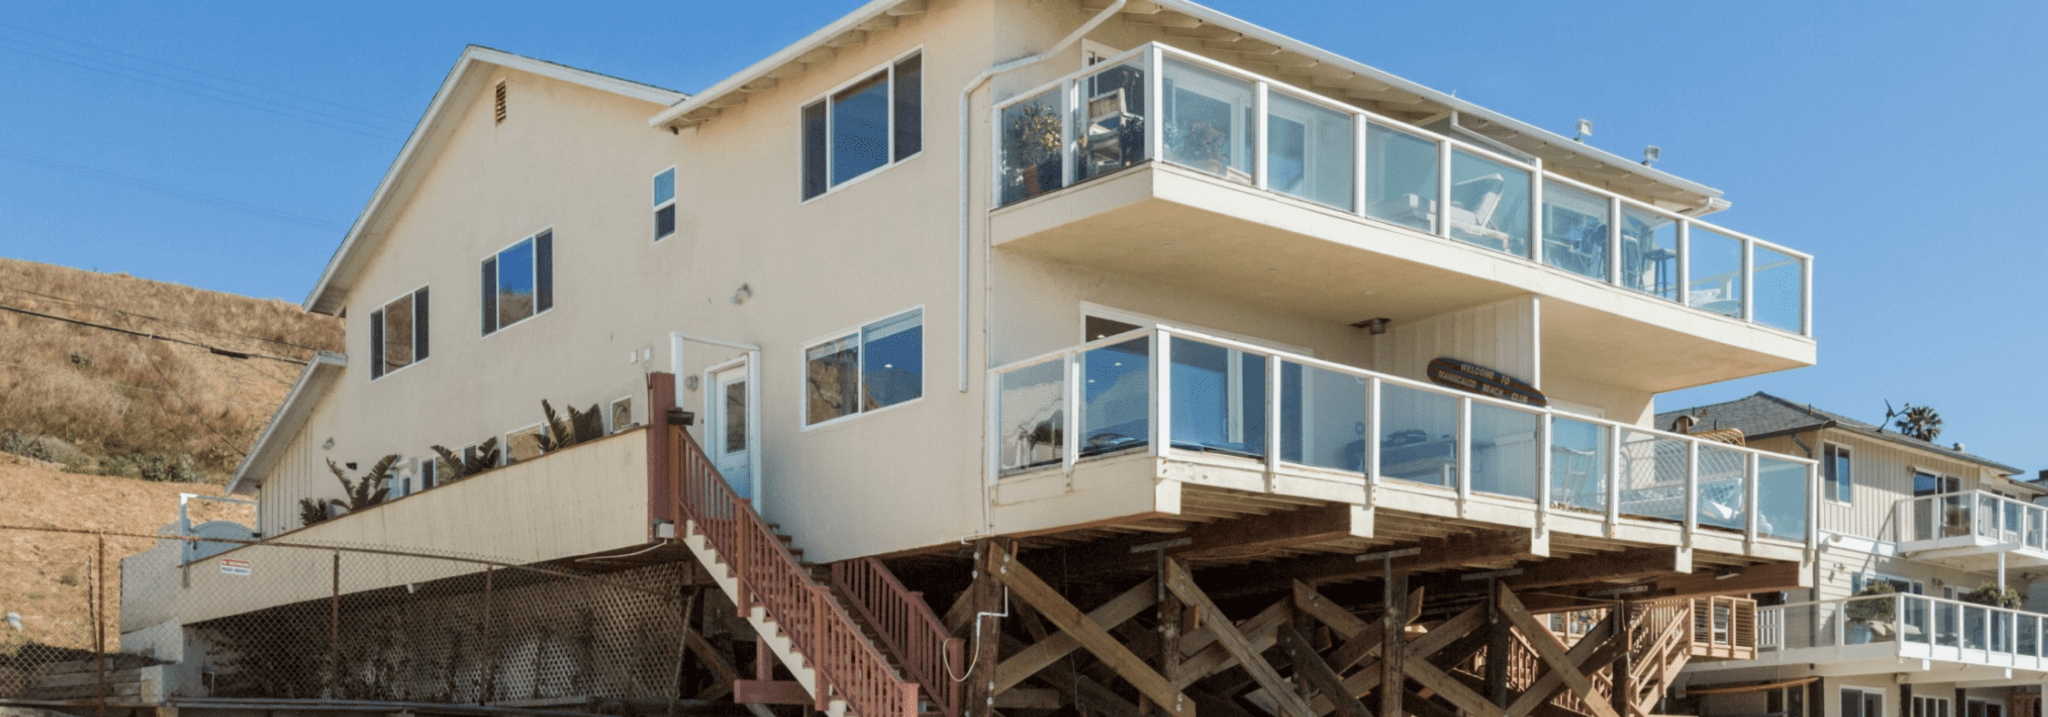 beachfront house LA Airbnb risen